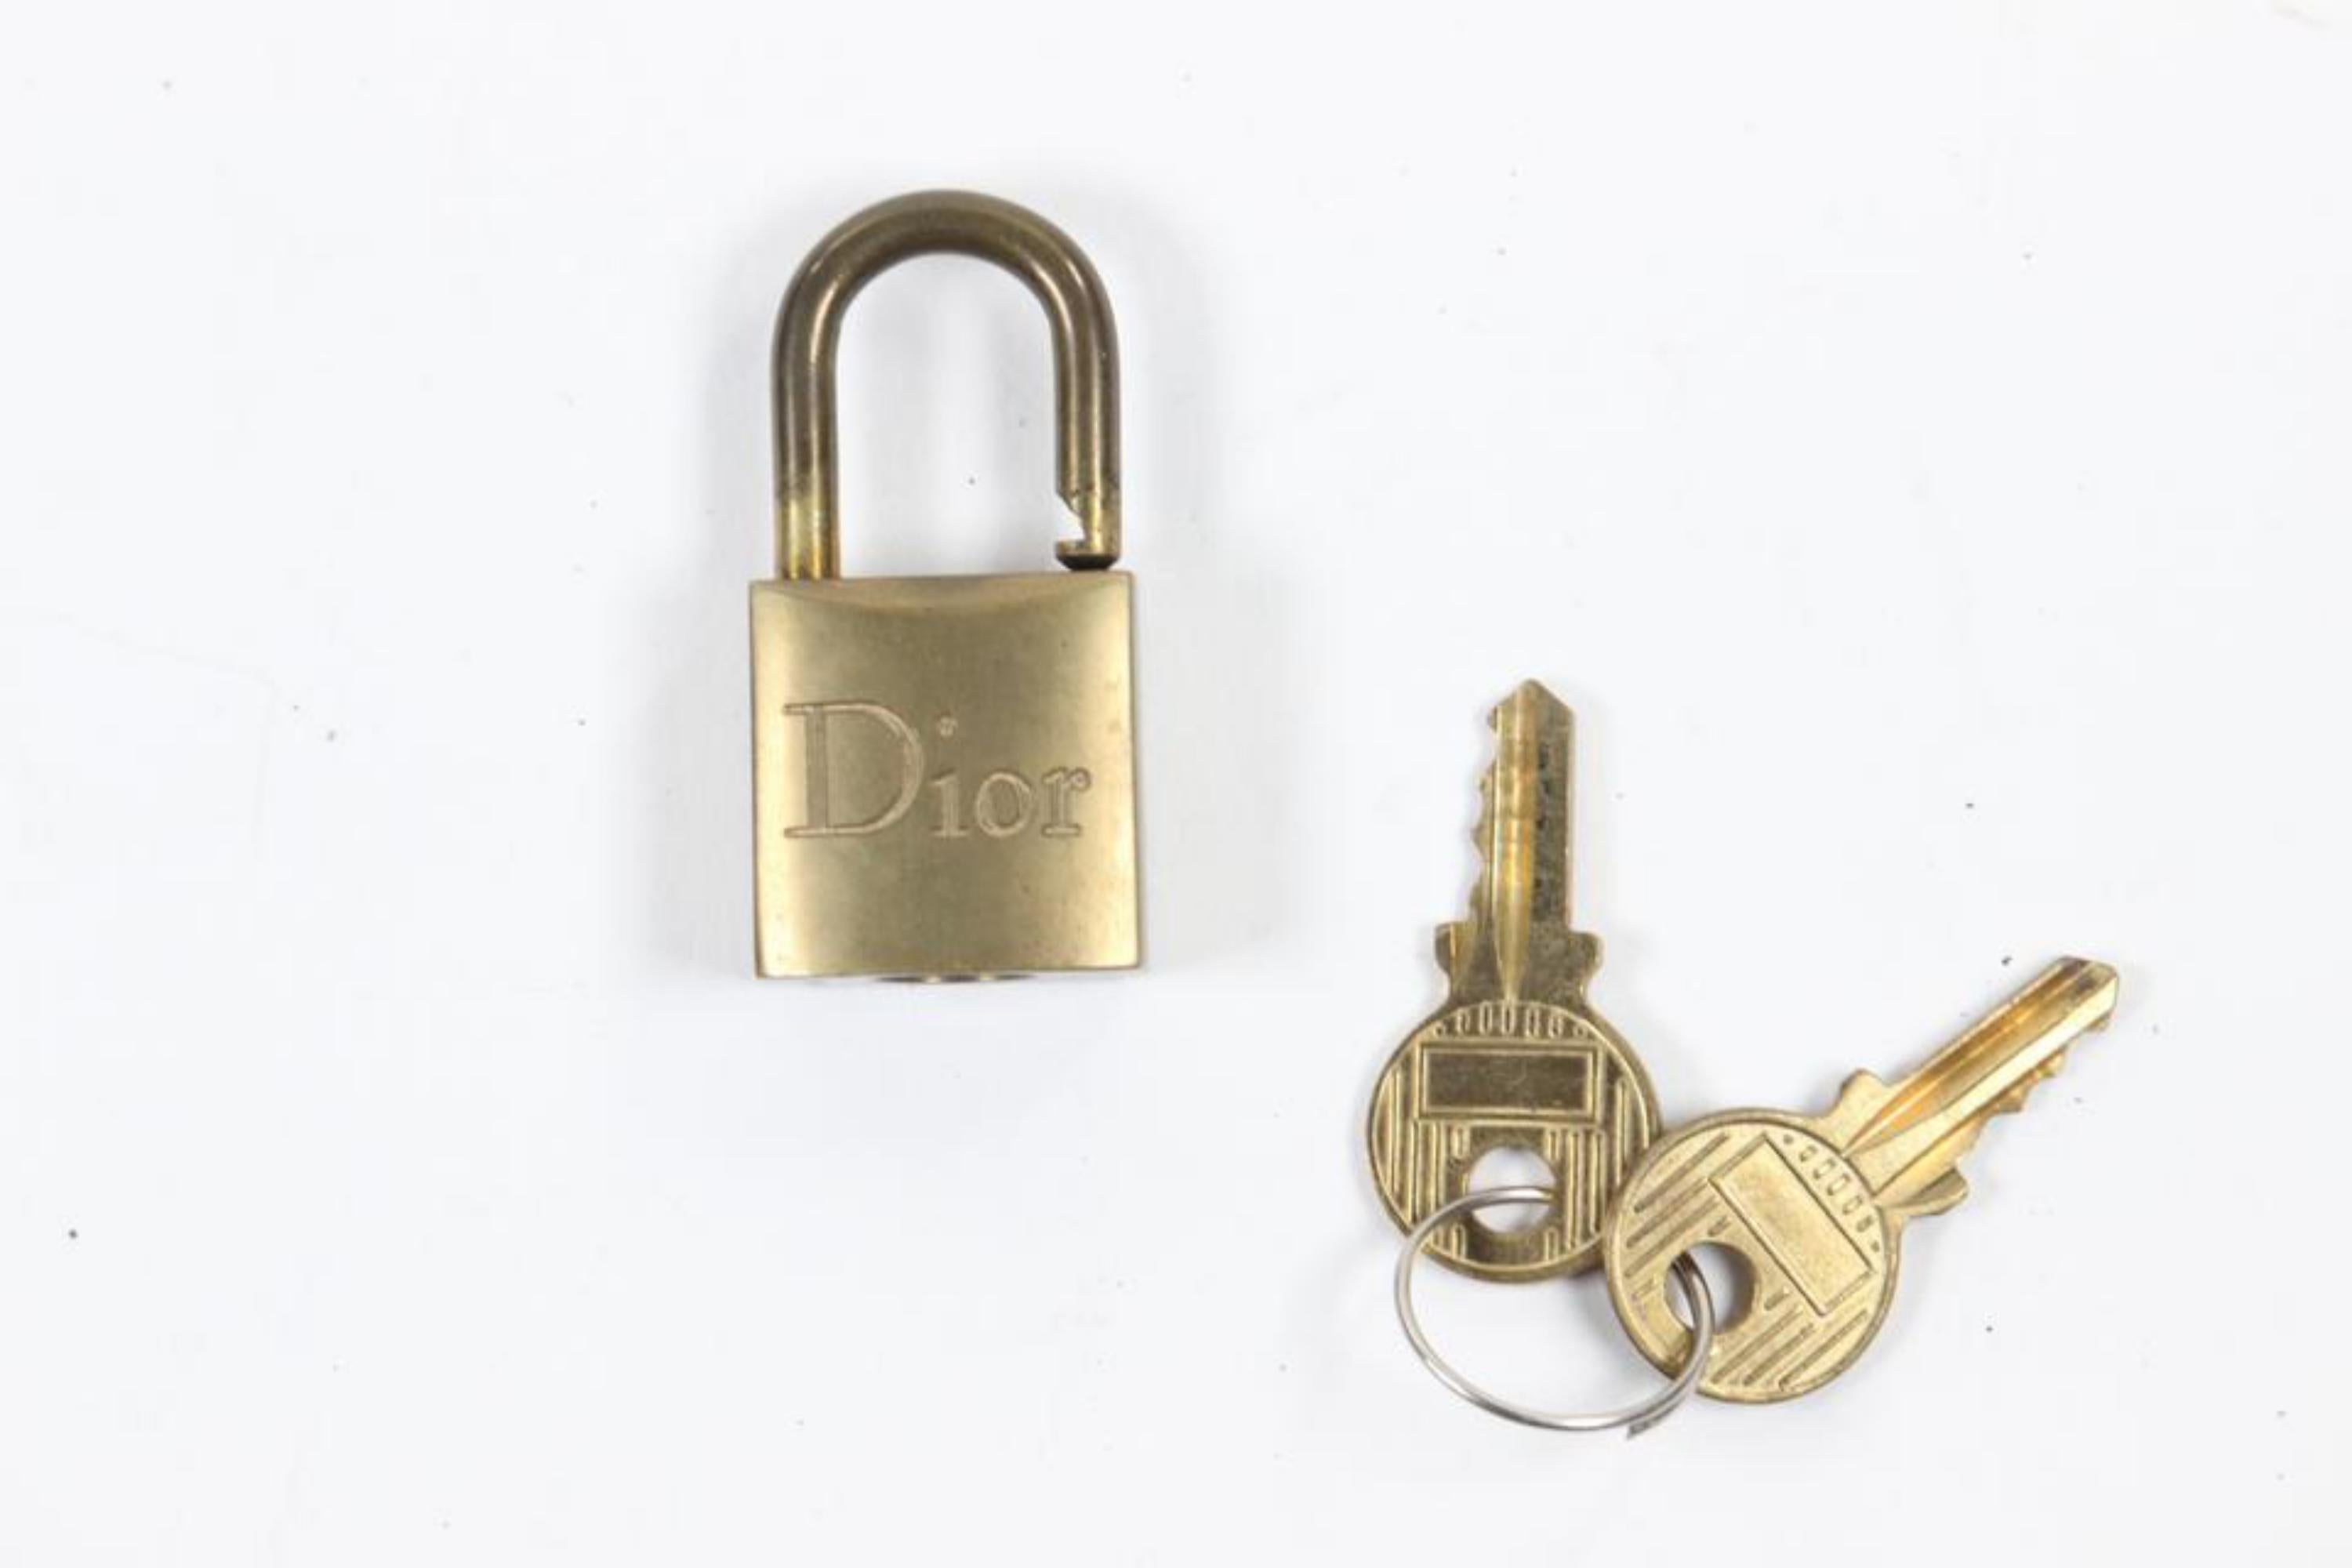 dior padlock